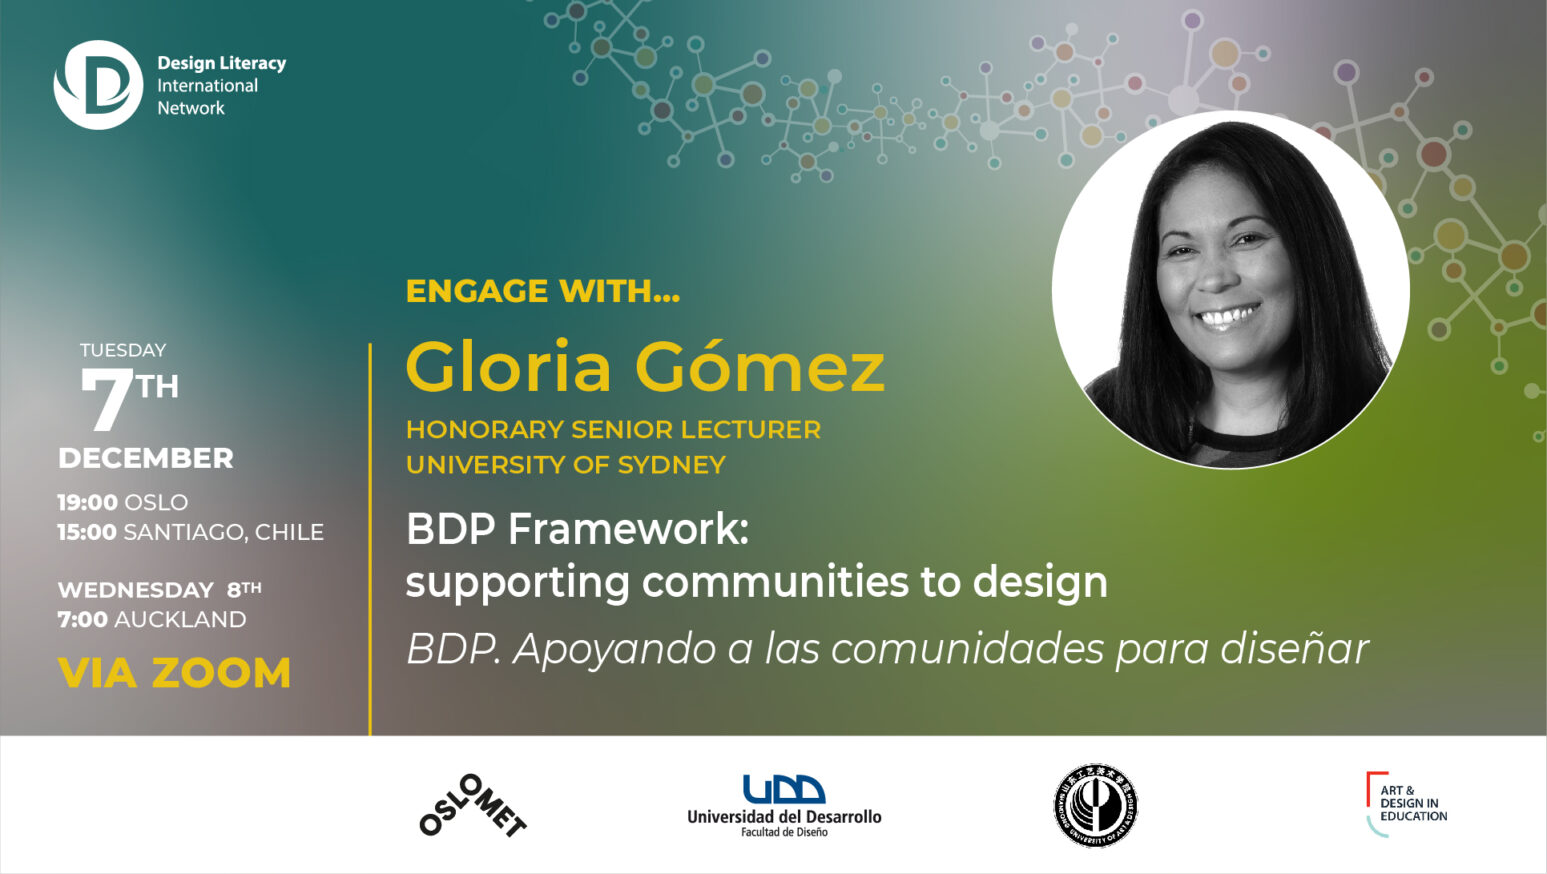 Engage with Gloria Gomez | Design Literacy International Network event